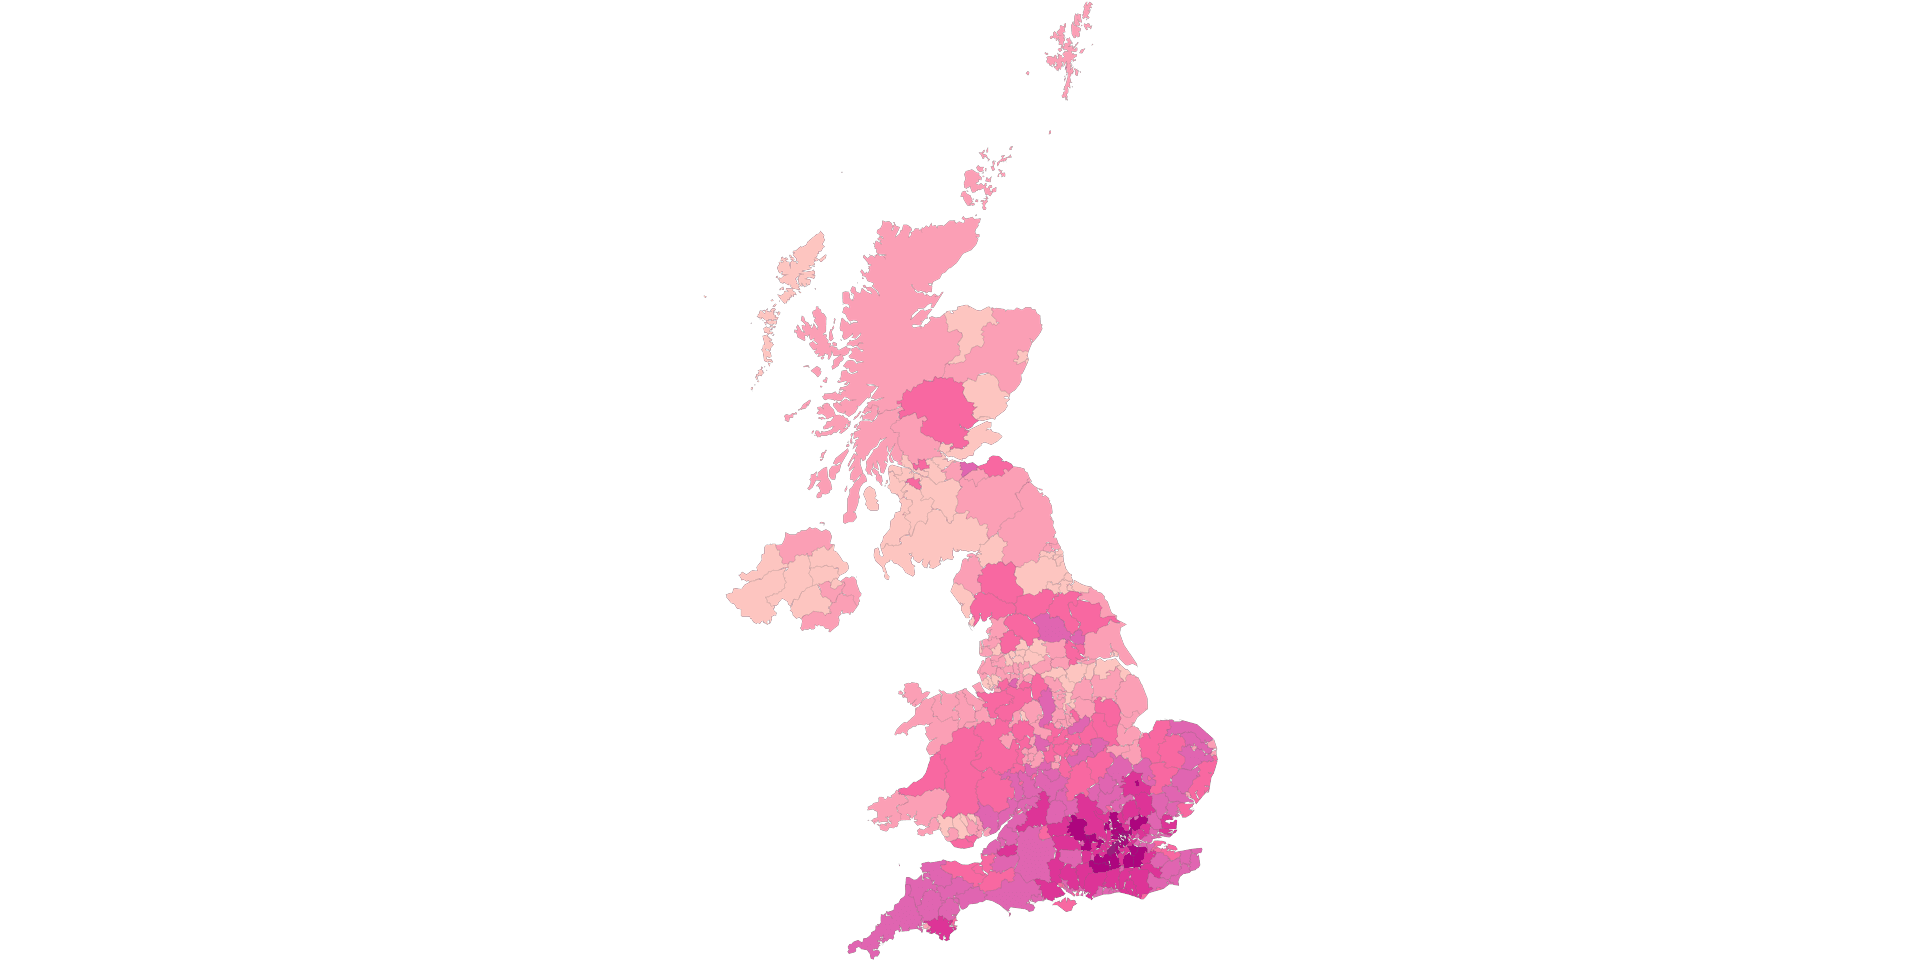 UK Area Average Property Price October 22 Map